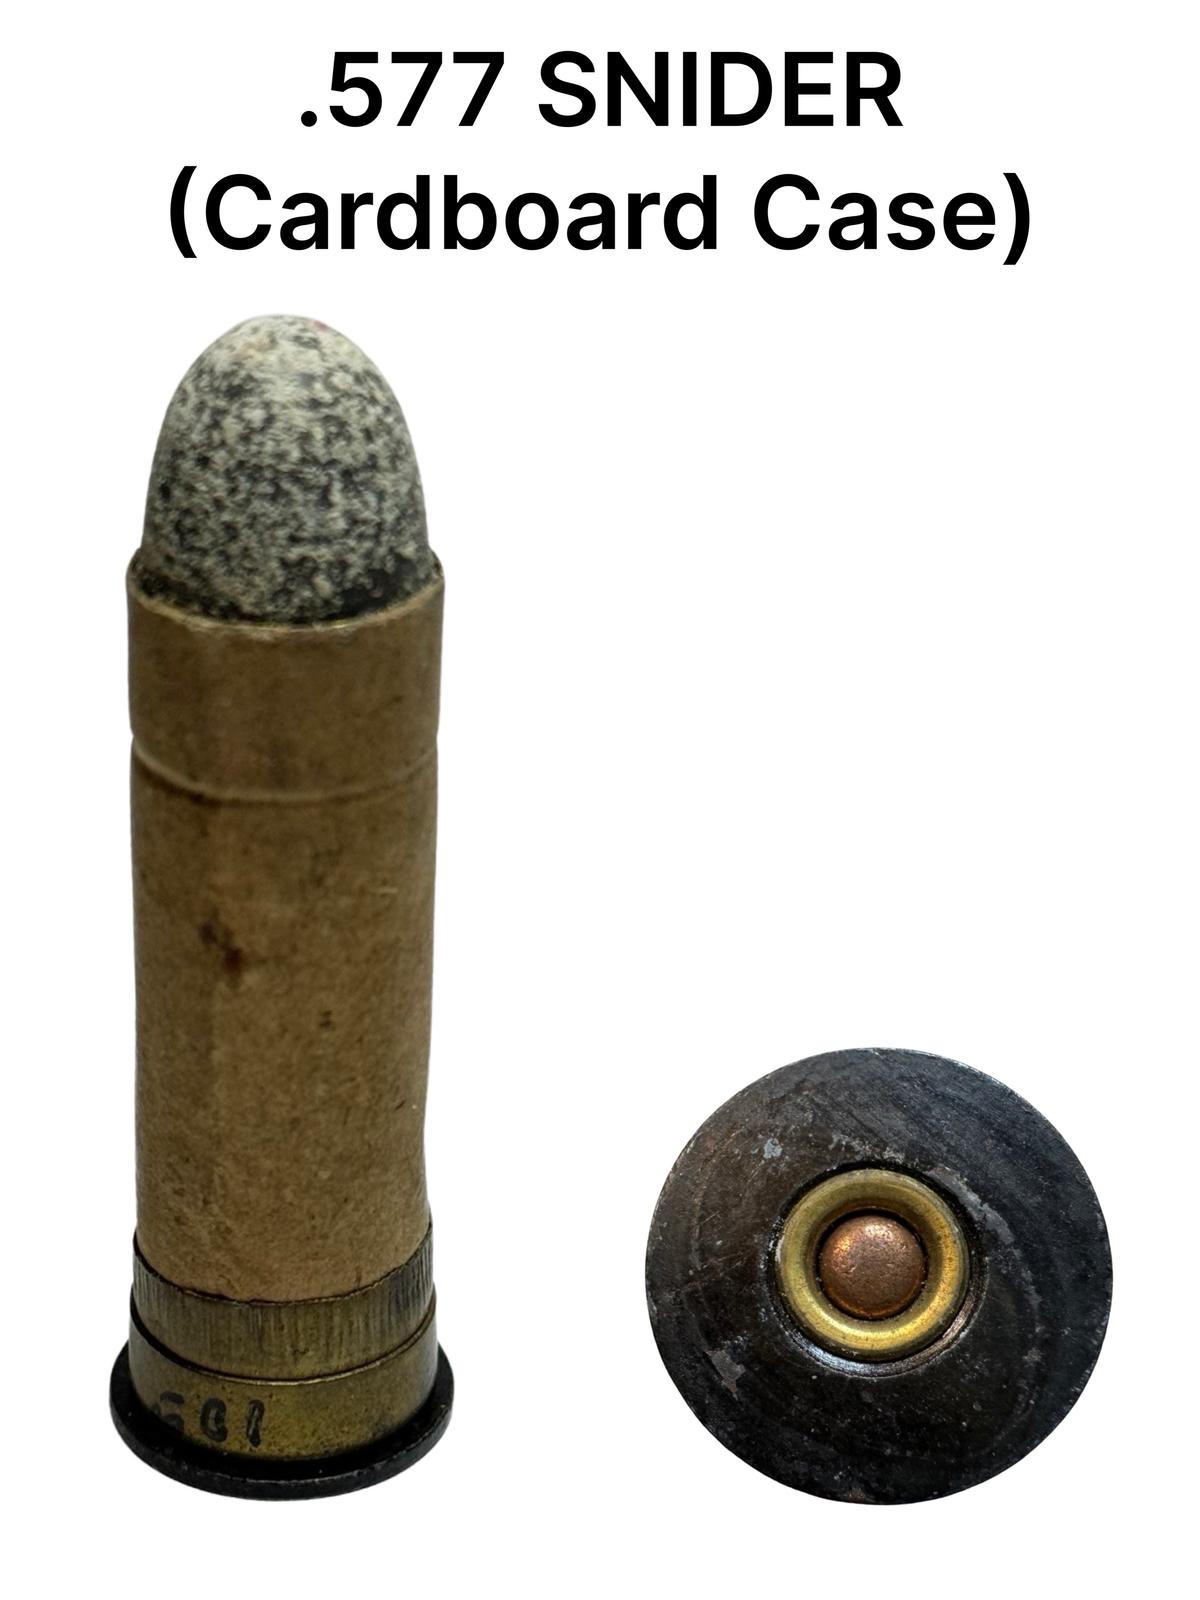 .577 SNIDER Cardboard Case Cartridge